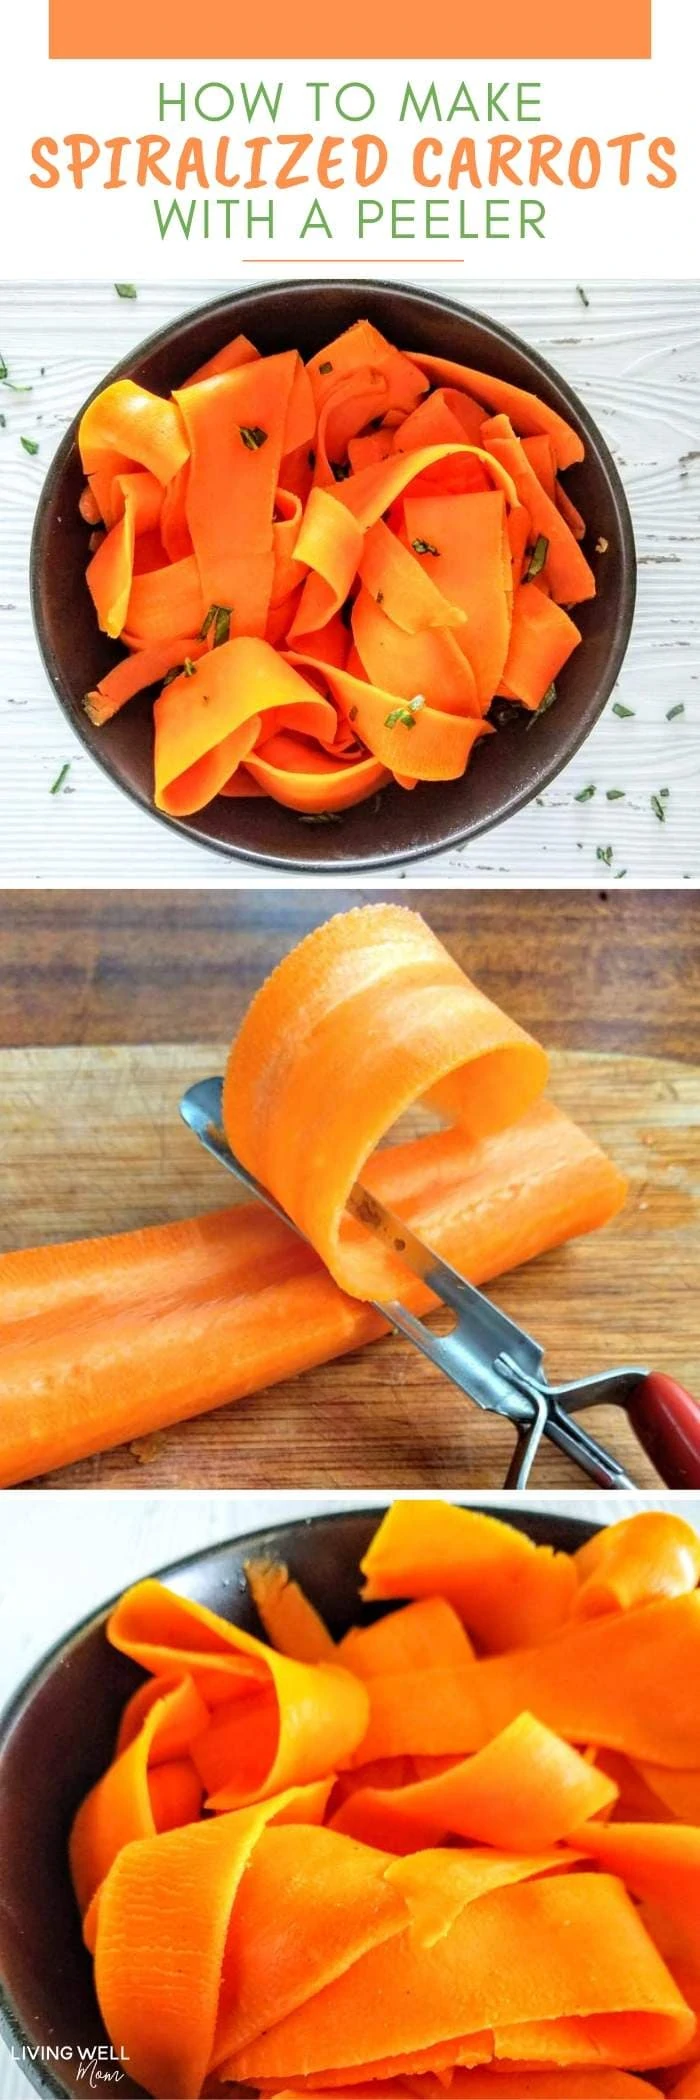 make spiralized carrots